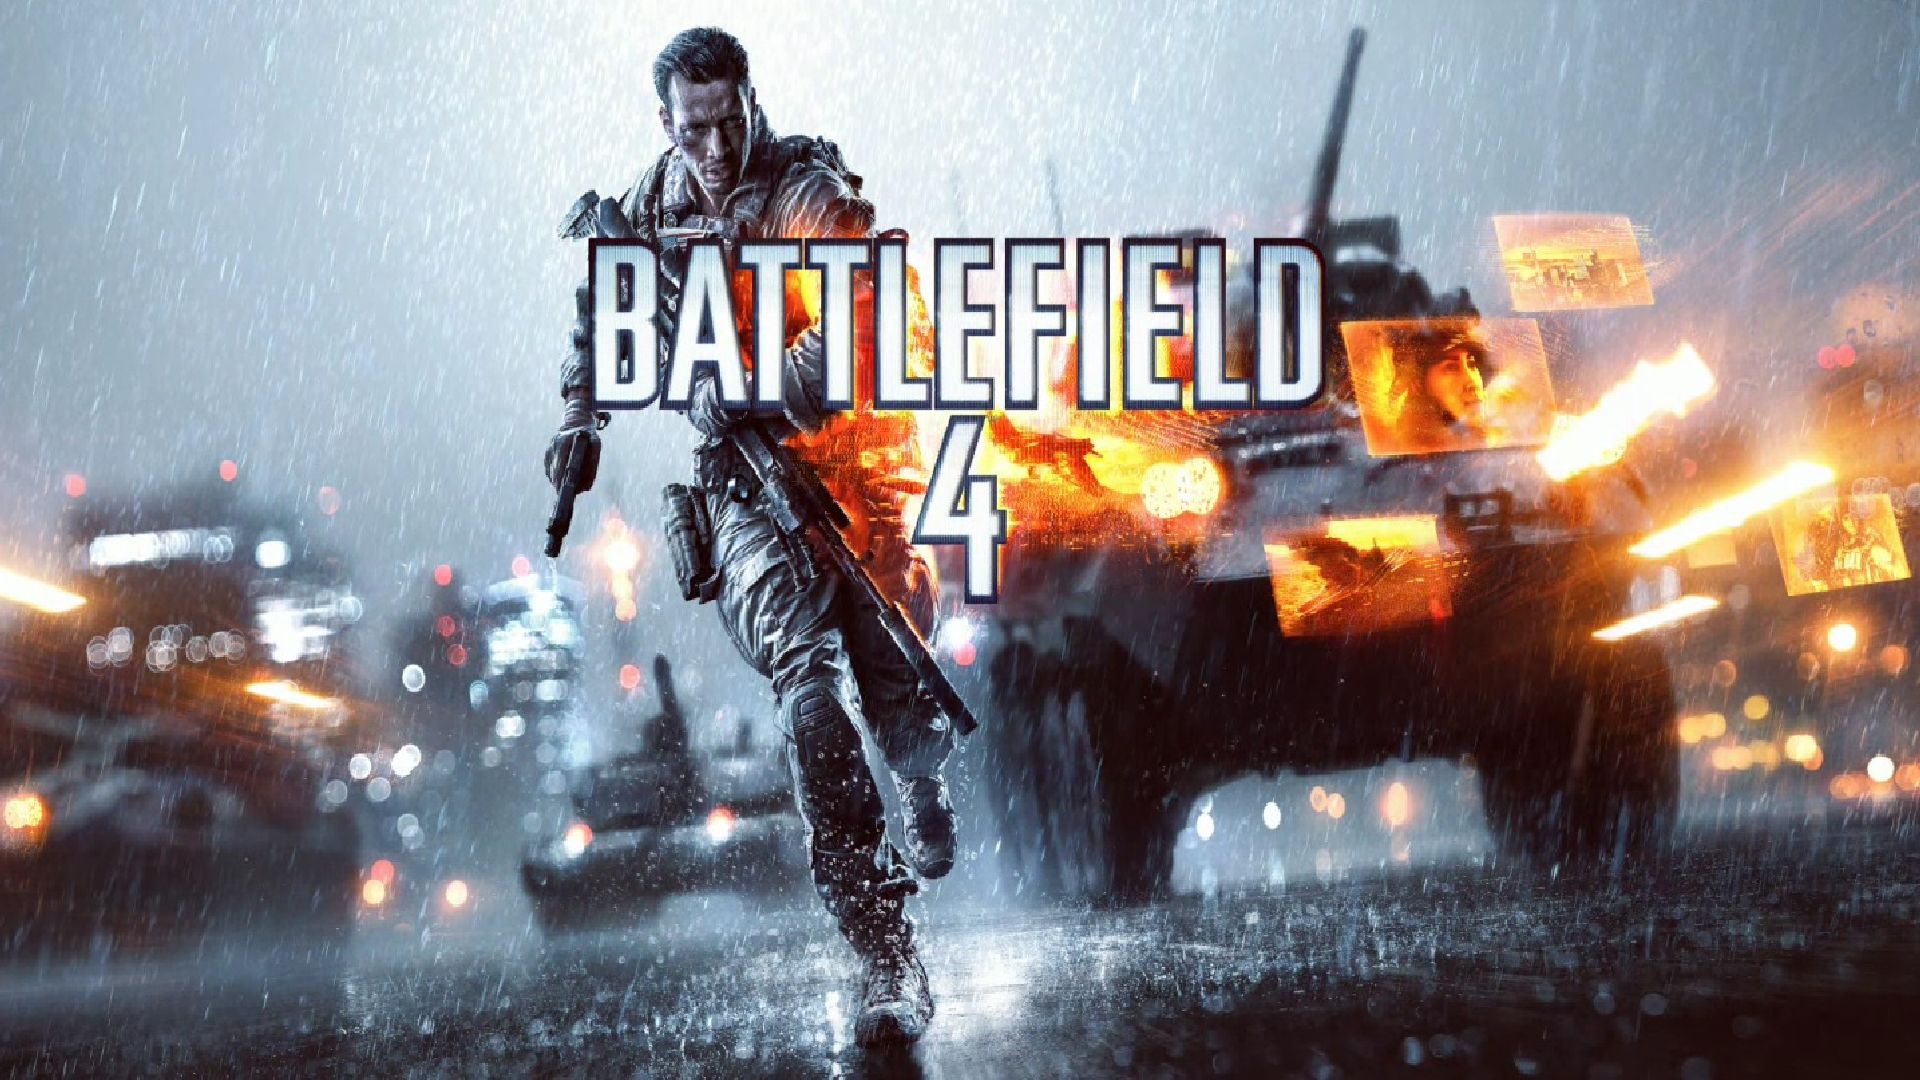 Battlefield 4 pc download